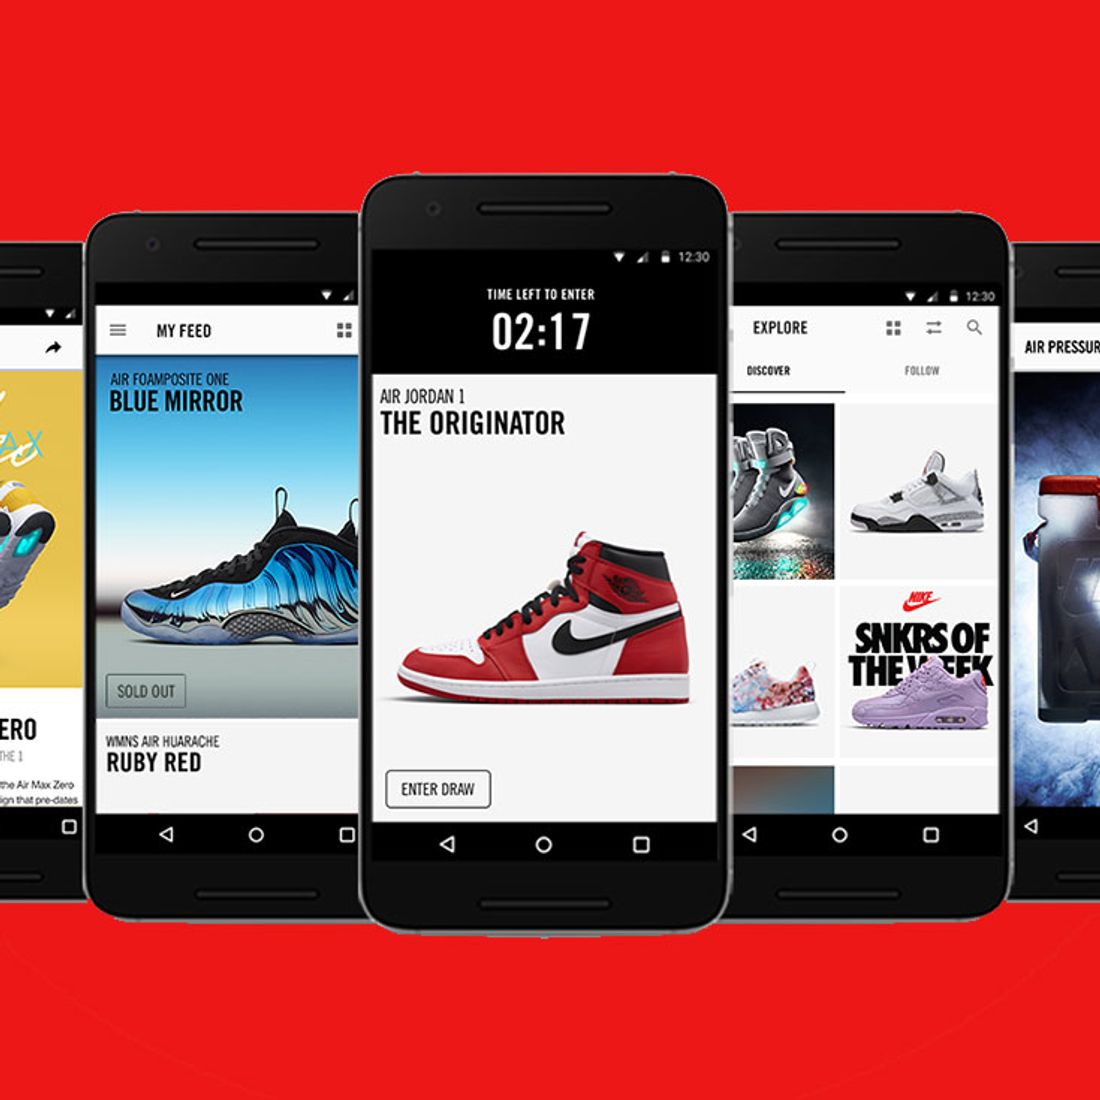 Consejo recuerdos Tiempos antiguos The 7 Best Apps for Buying Sneakers - Sneaker Freaker